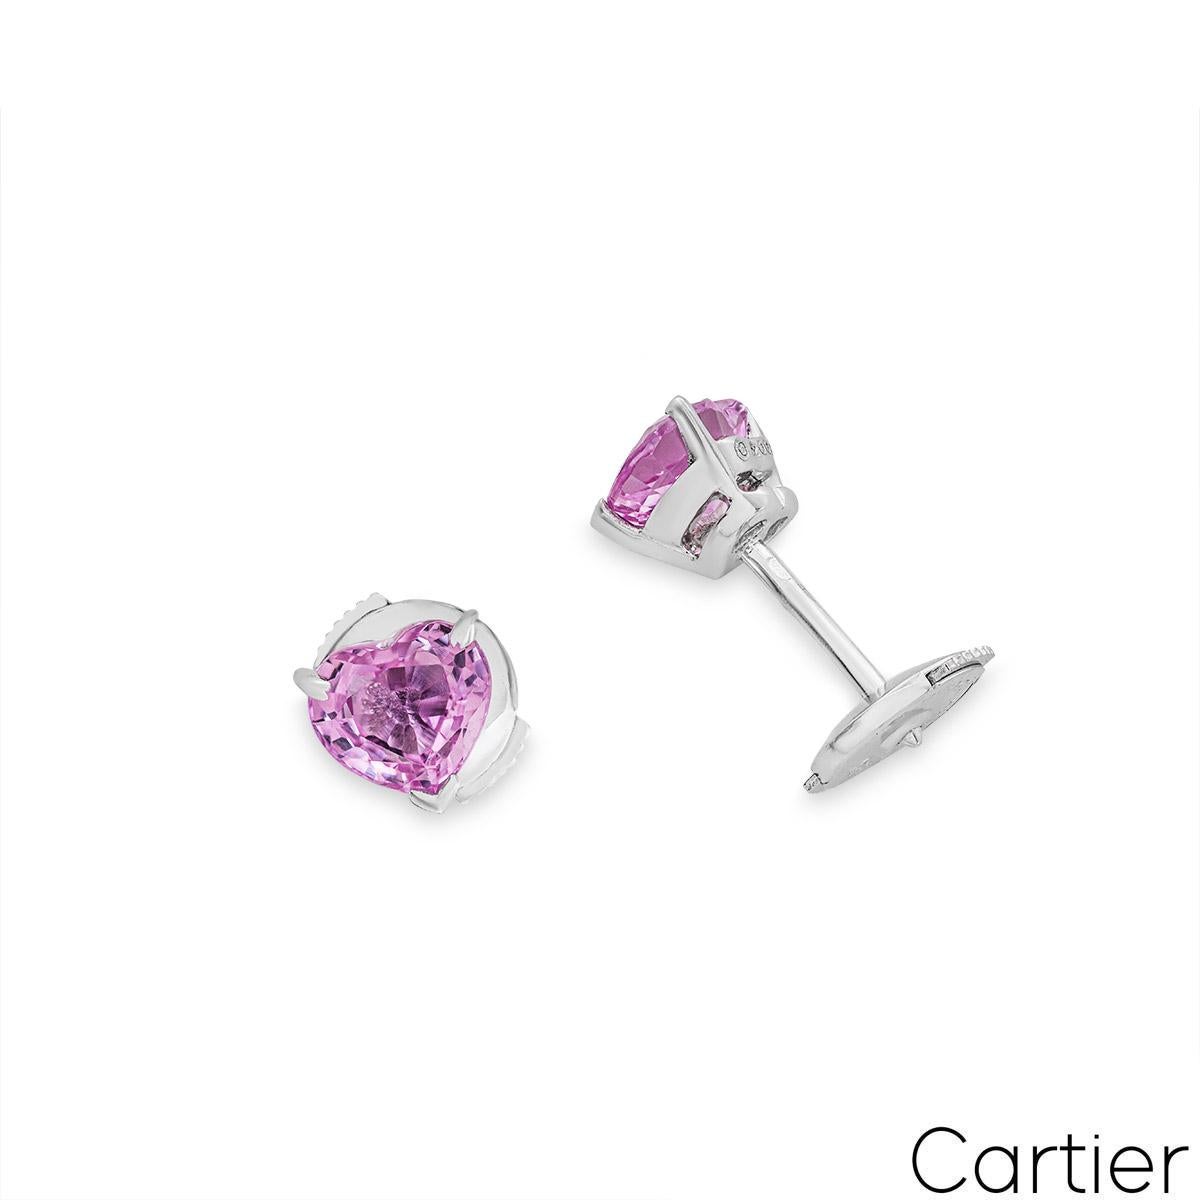 pink sapphire and diamond earrings